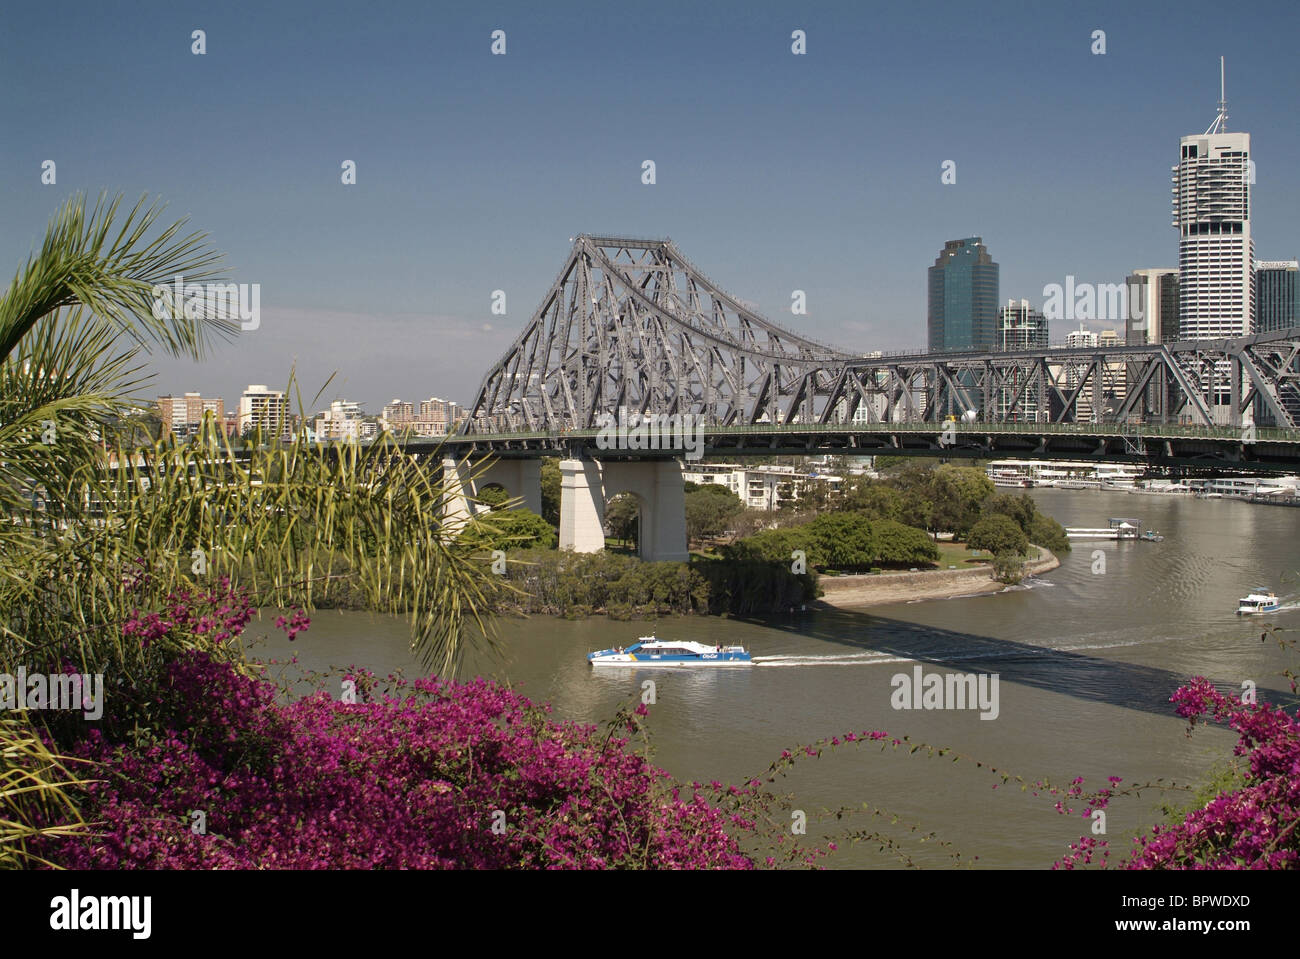 The Story Bridge in the city of Brisbane, Australia Stock Photo